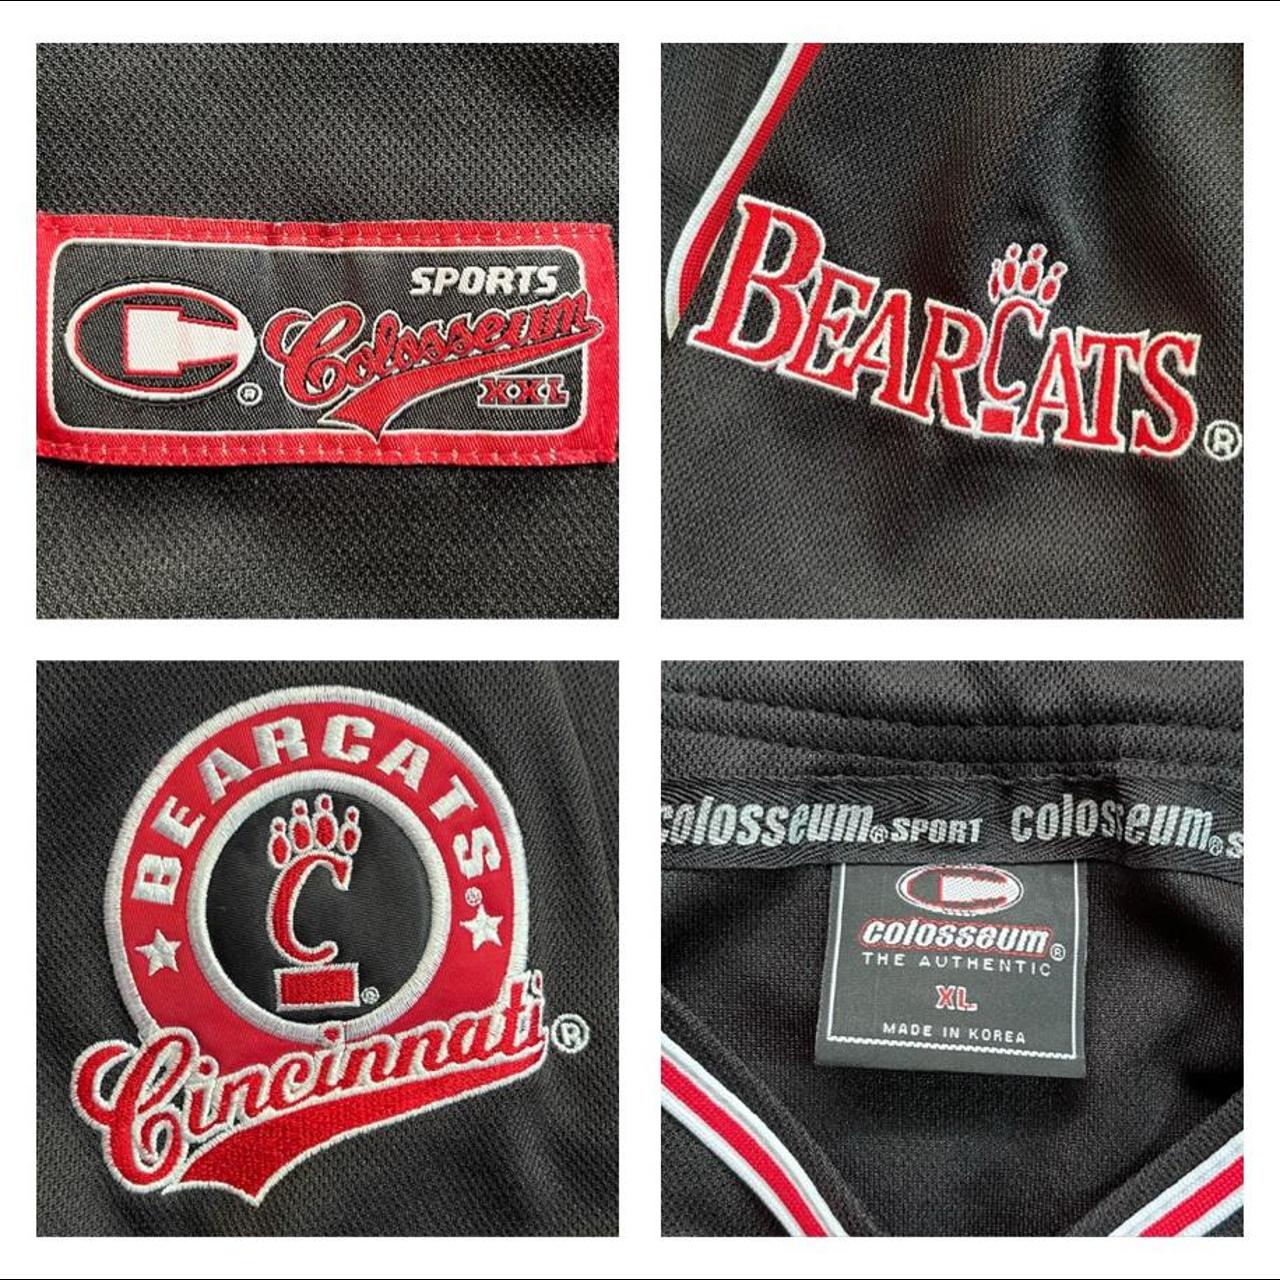 Vintage Nike Cincinnati Bearcats Jersey - Depop